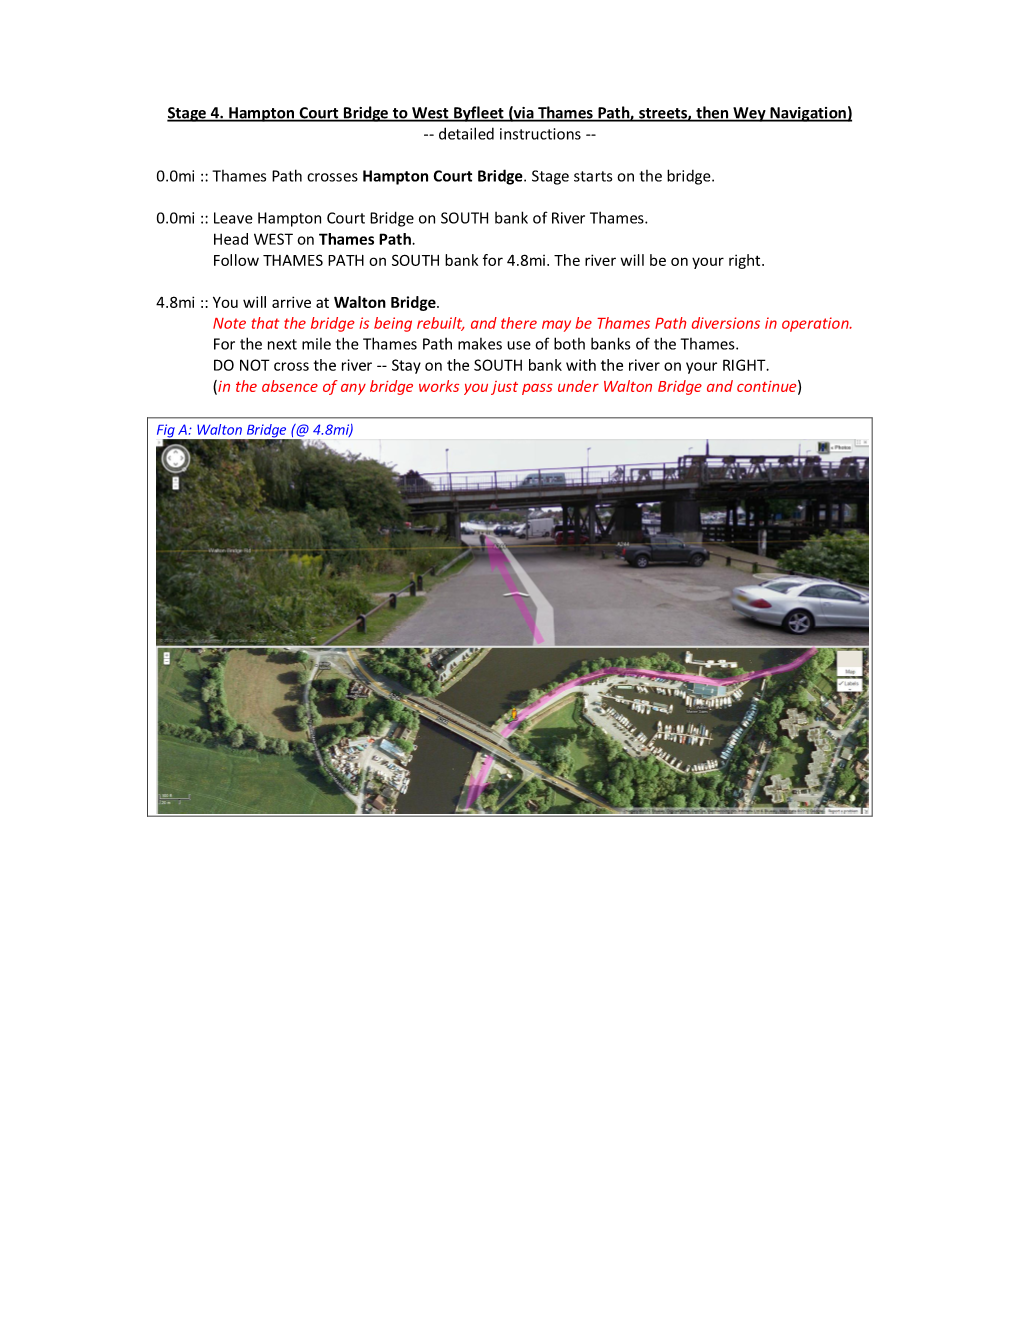 Stage 4. Hampton Court Bridge to West Byfleet (Via Thames Path, Streets, Then Wey Navigation) -- Detailed Instructions